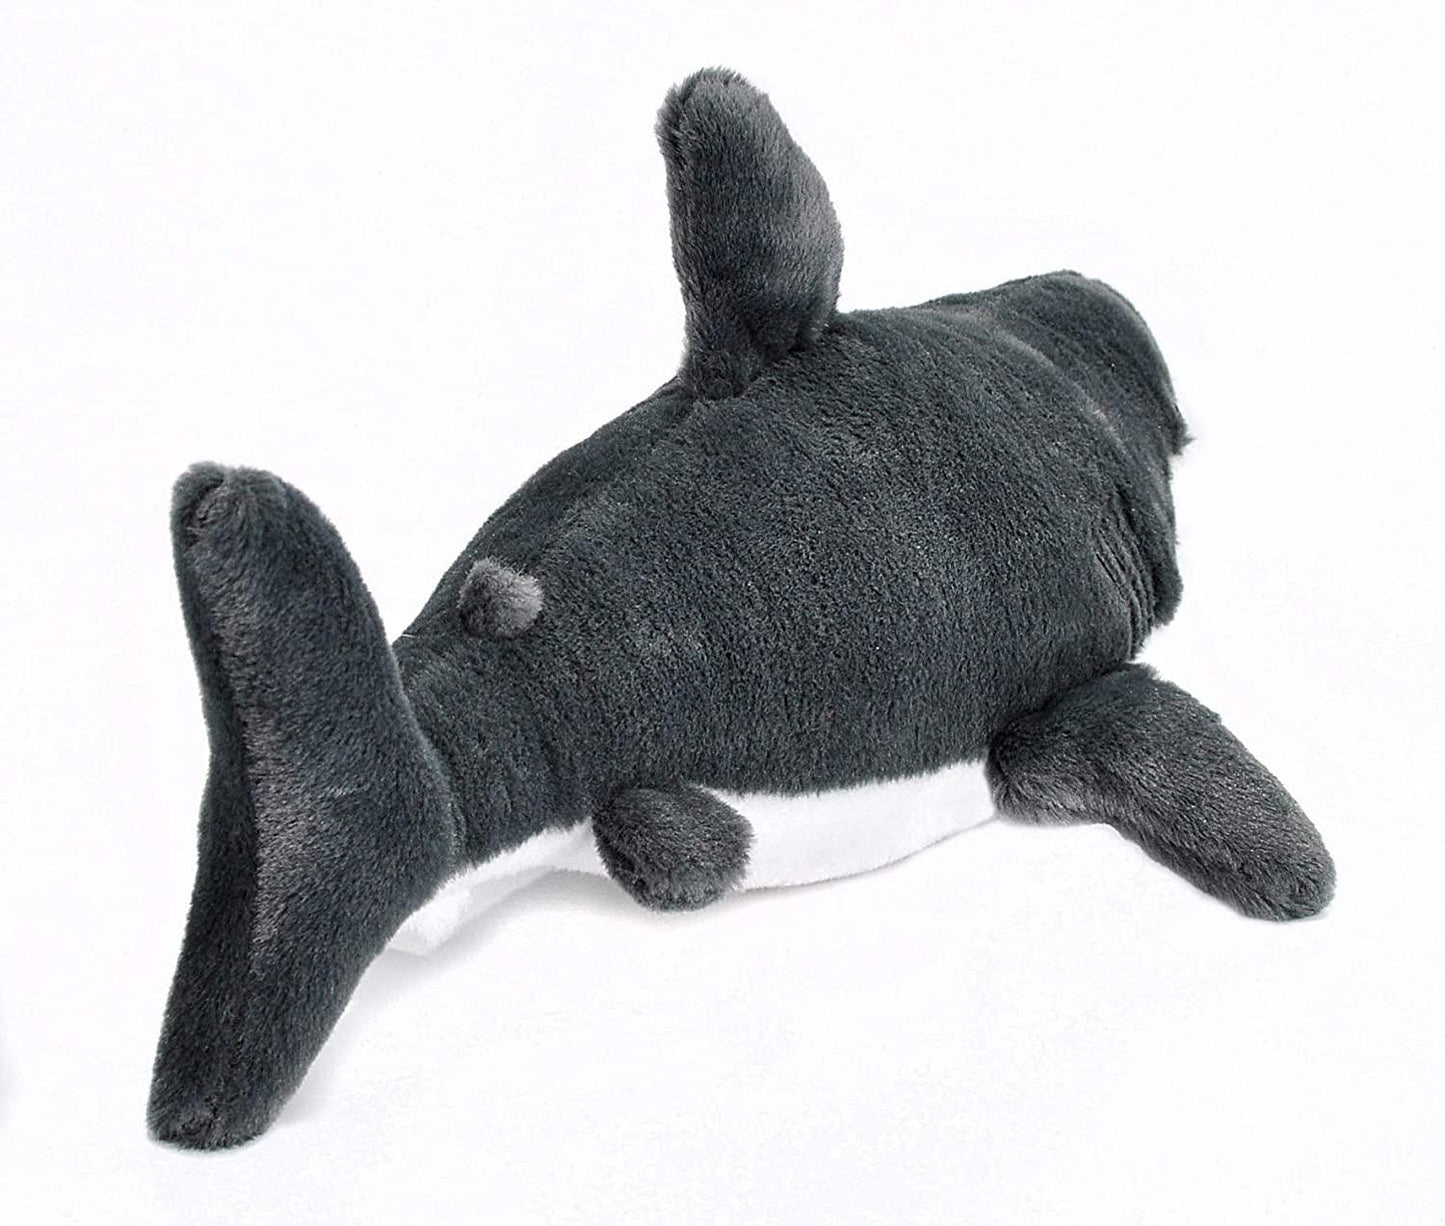 Wild Republic Great White Shark Plush, Stuffed Animal, Plush Toy, Gifts for Kids, Cuddlekins 13 inches